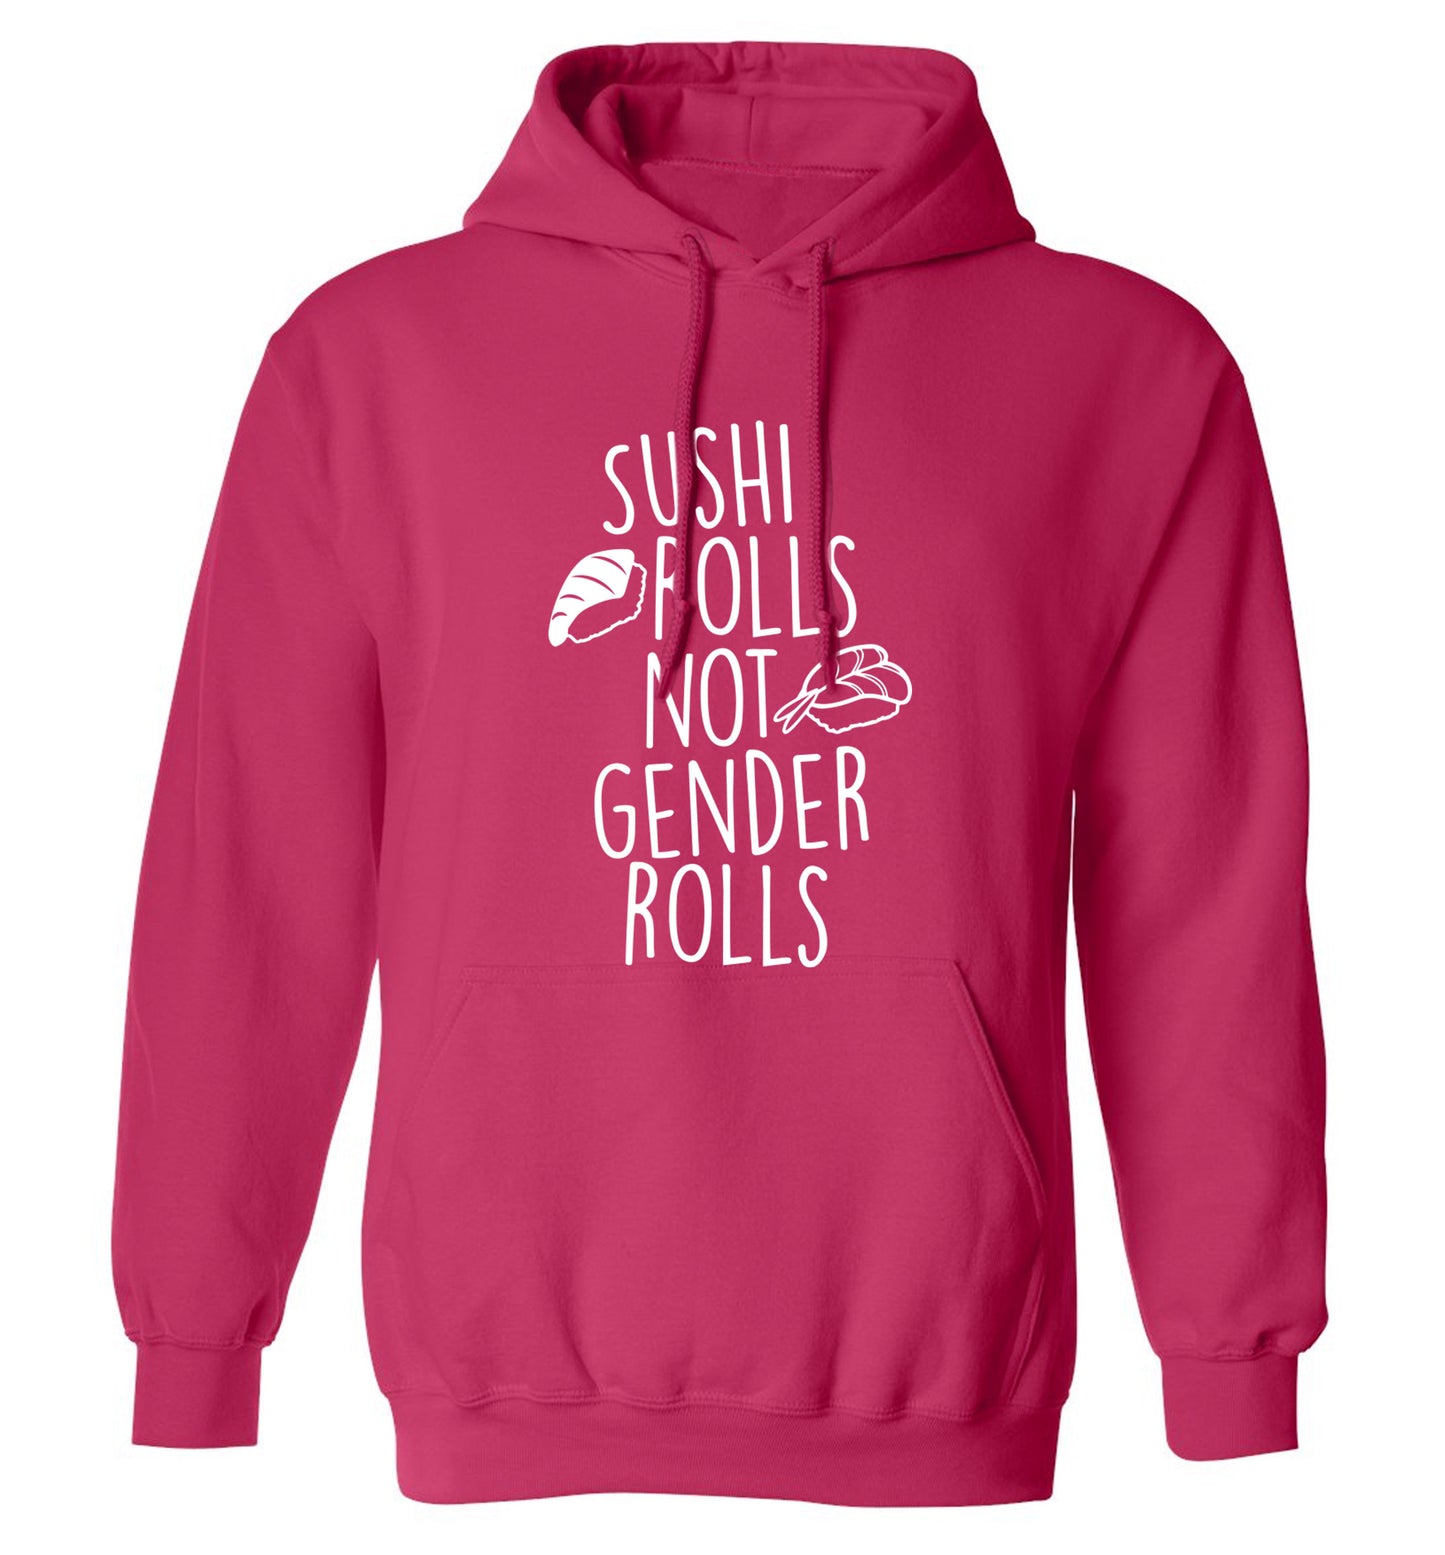 Sushi rolls not gender rolls adults unisex pink hoodie 2XL